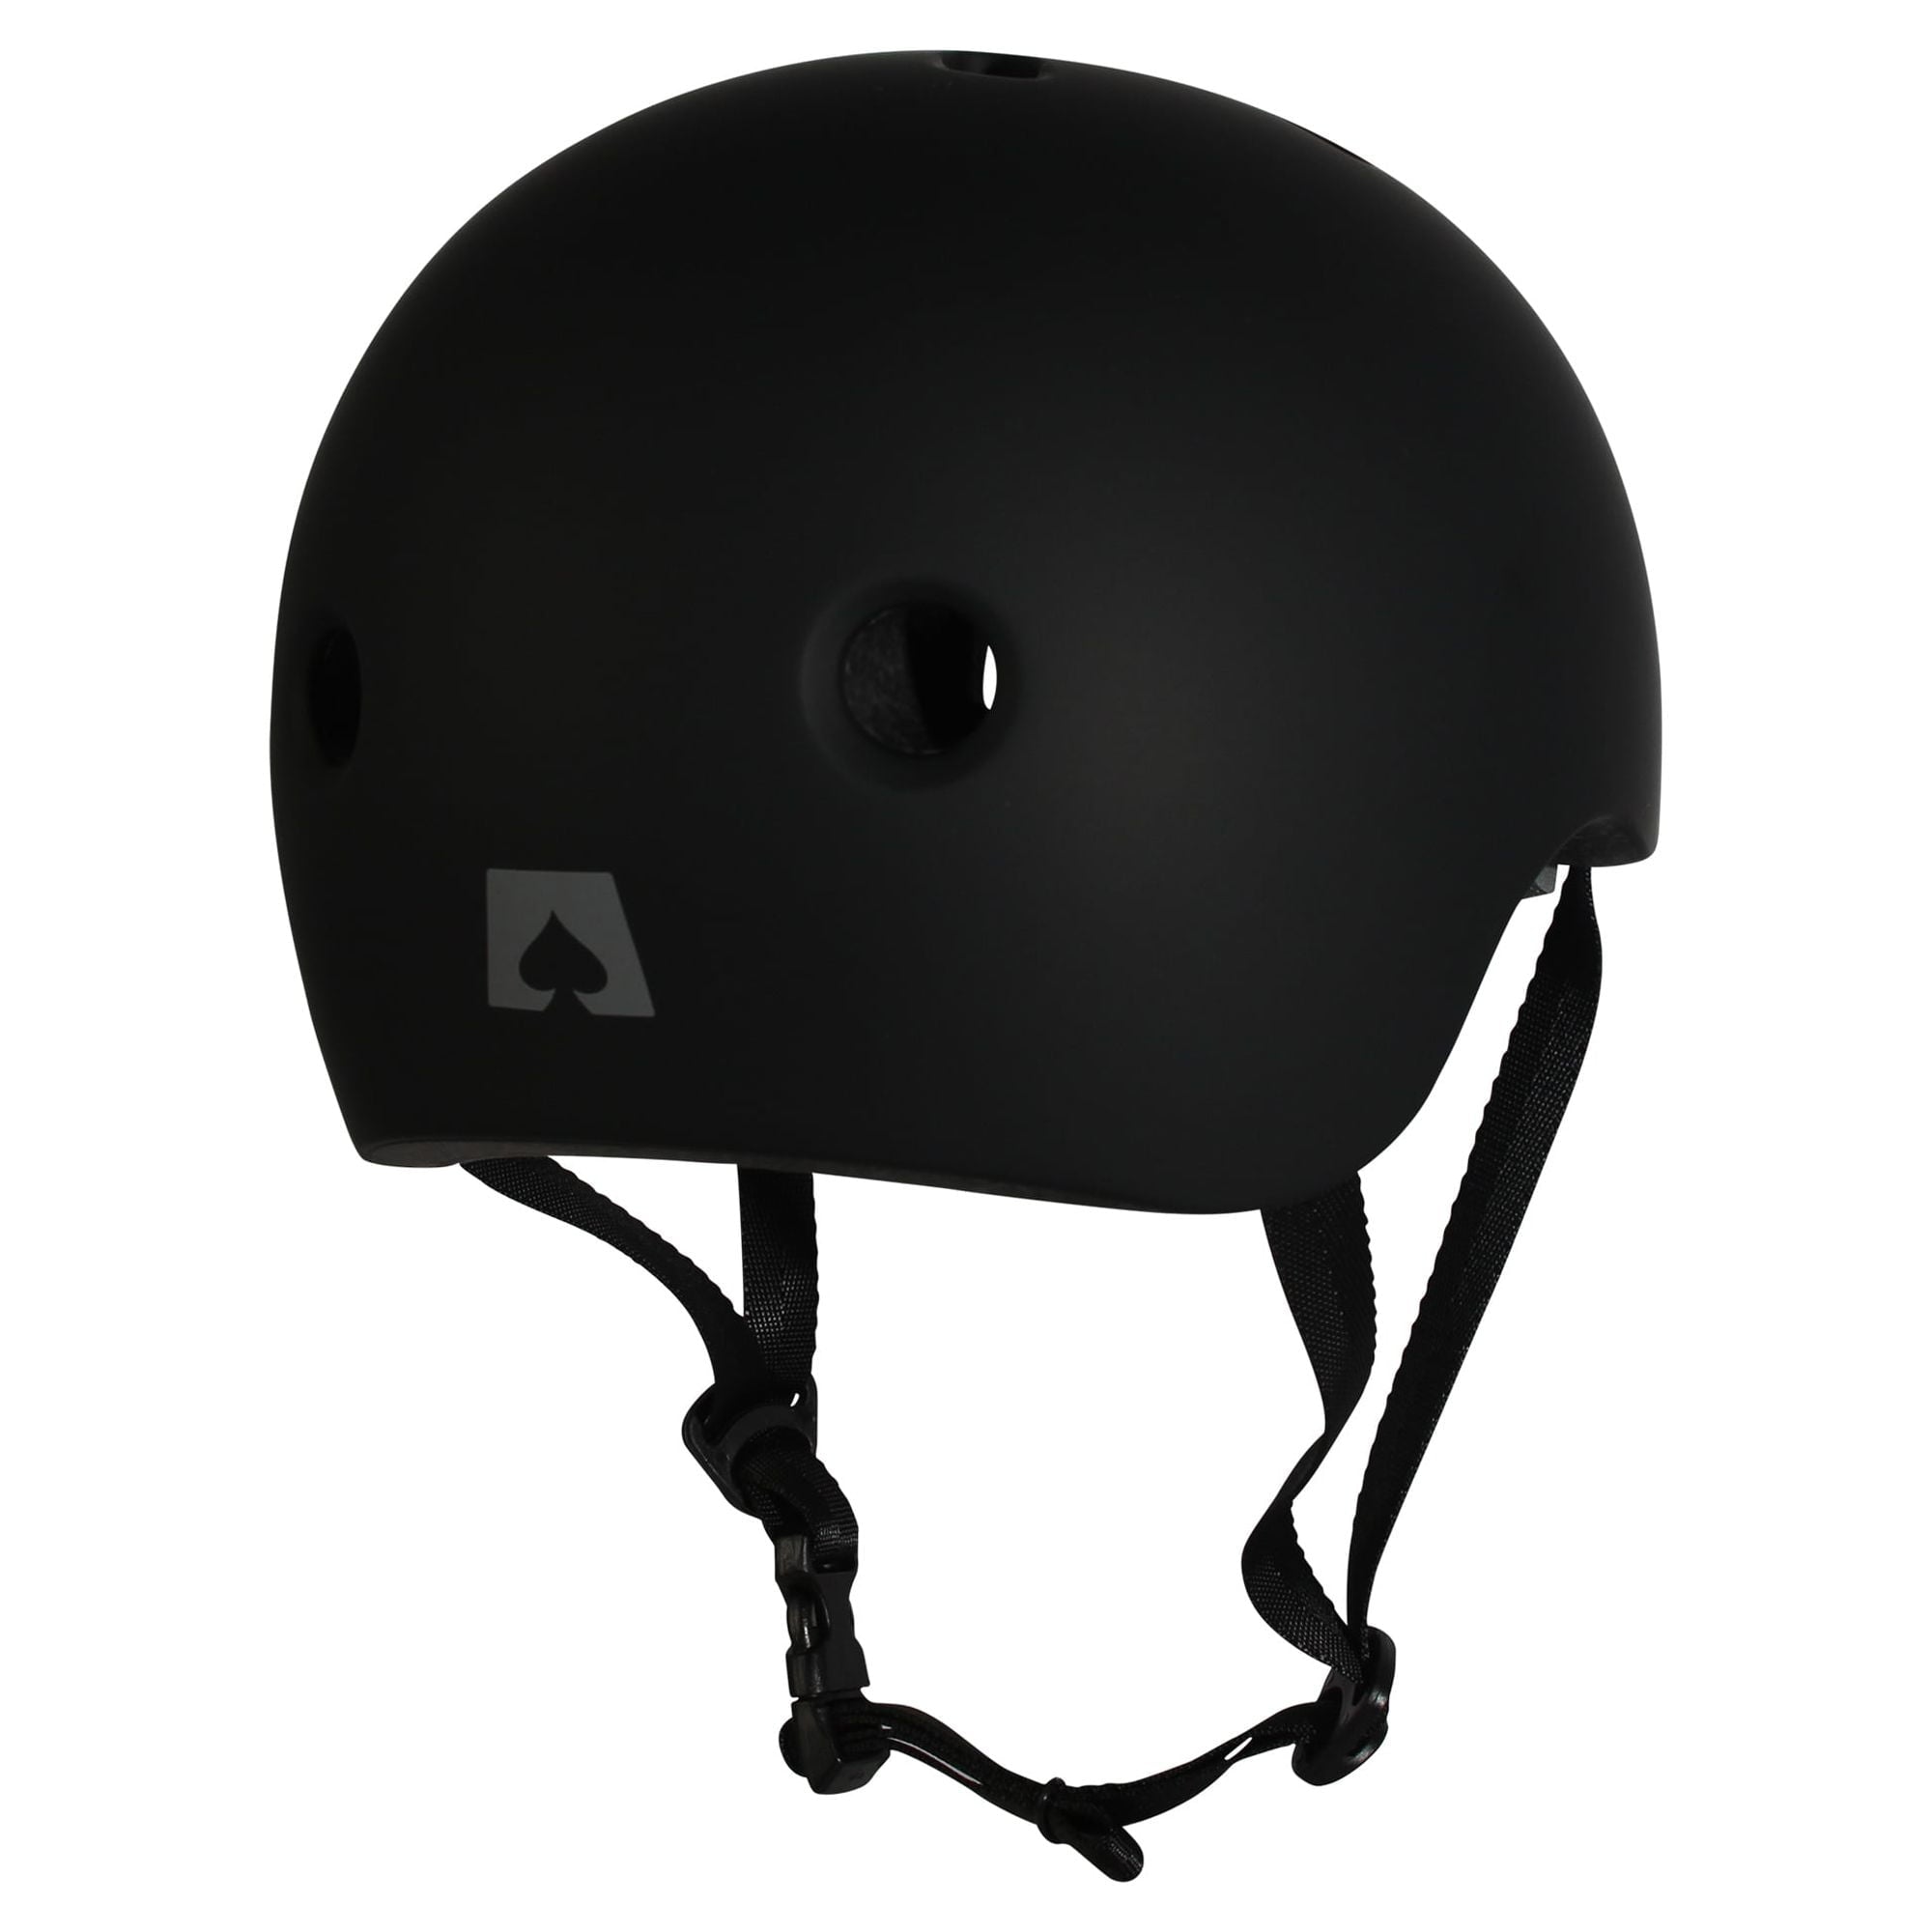 Pro-Tec Spade Series Lightweight Certified Multi-Sport Helmet, Ages 8+, 2 Pack